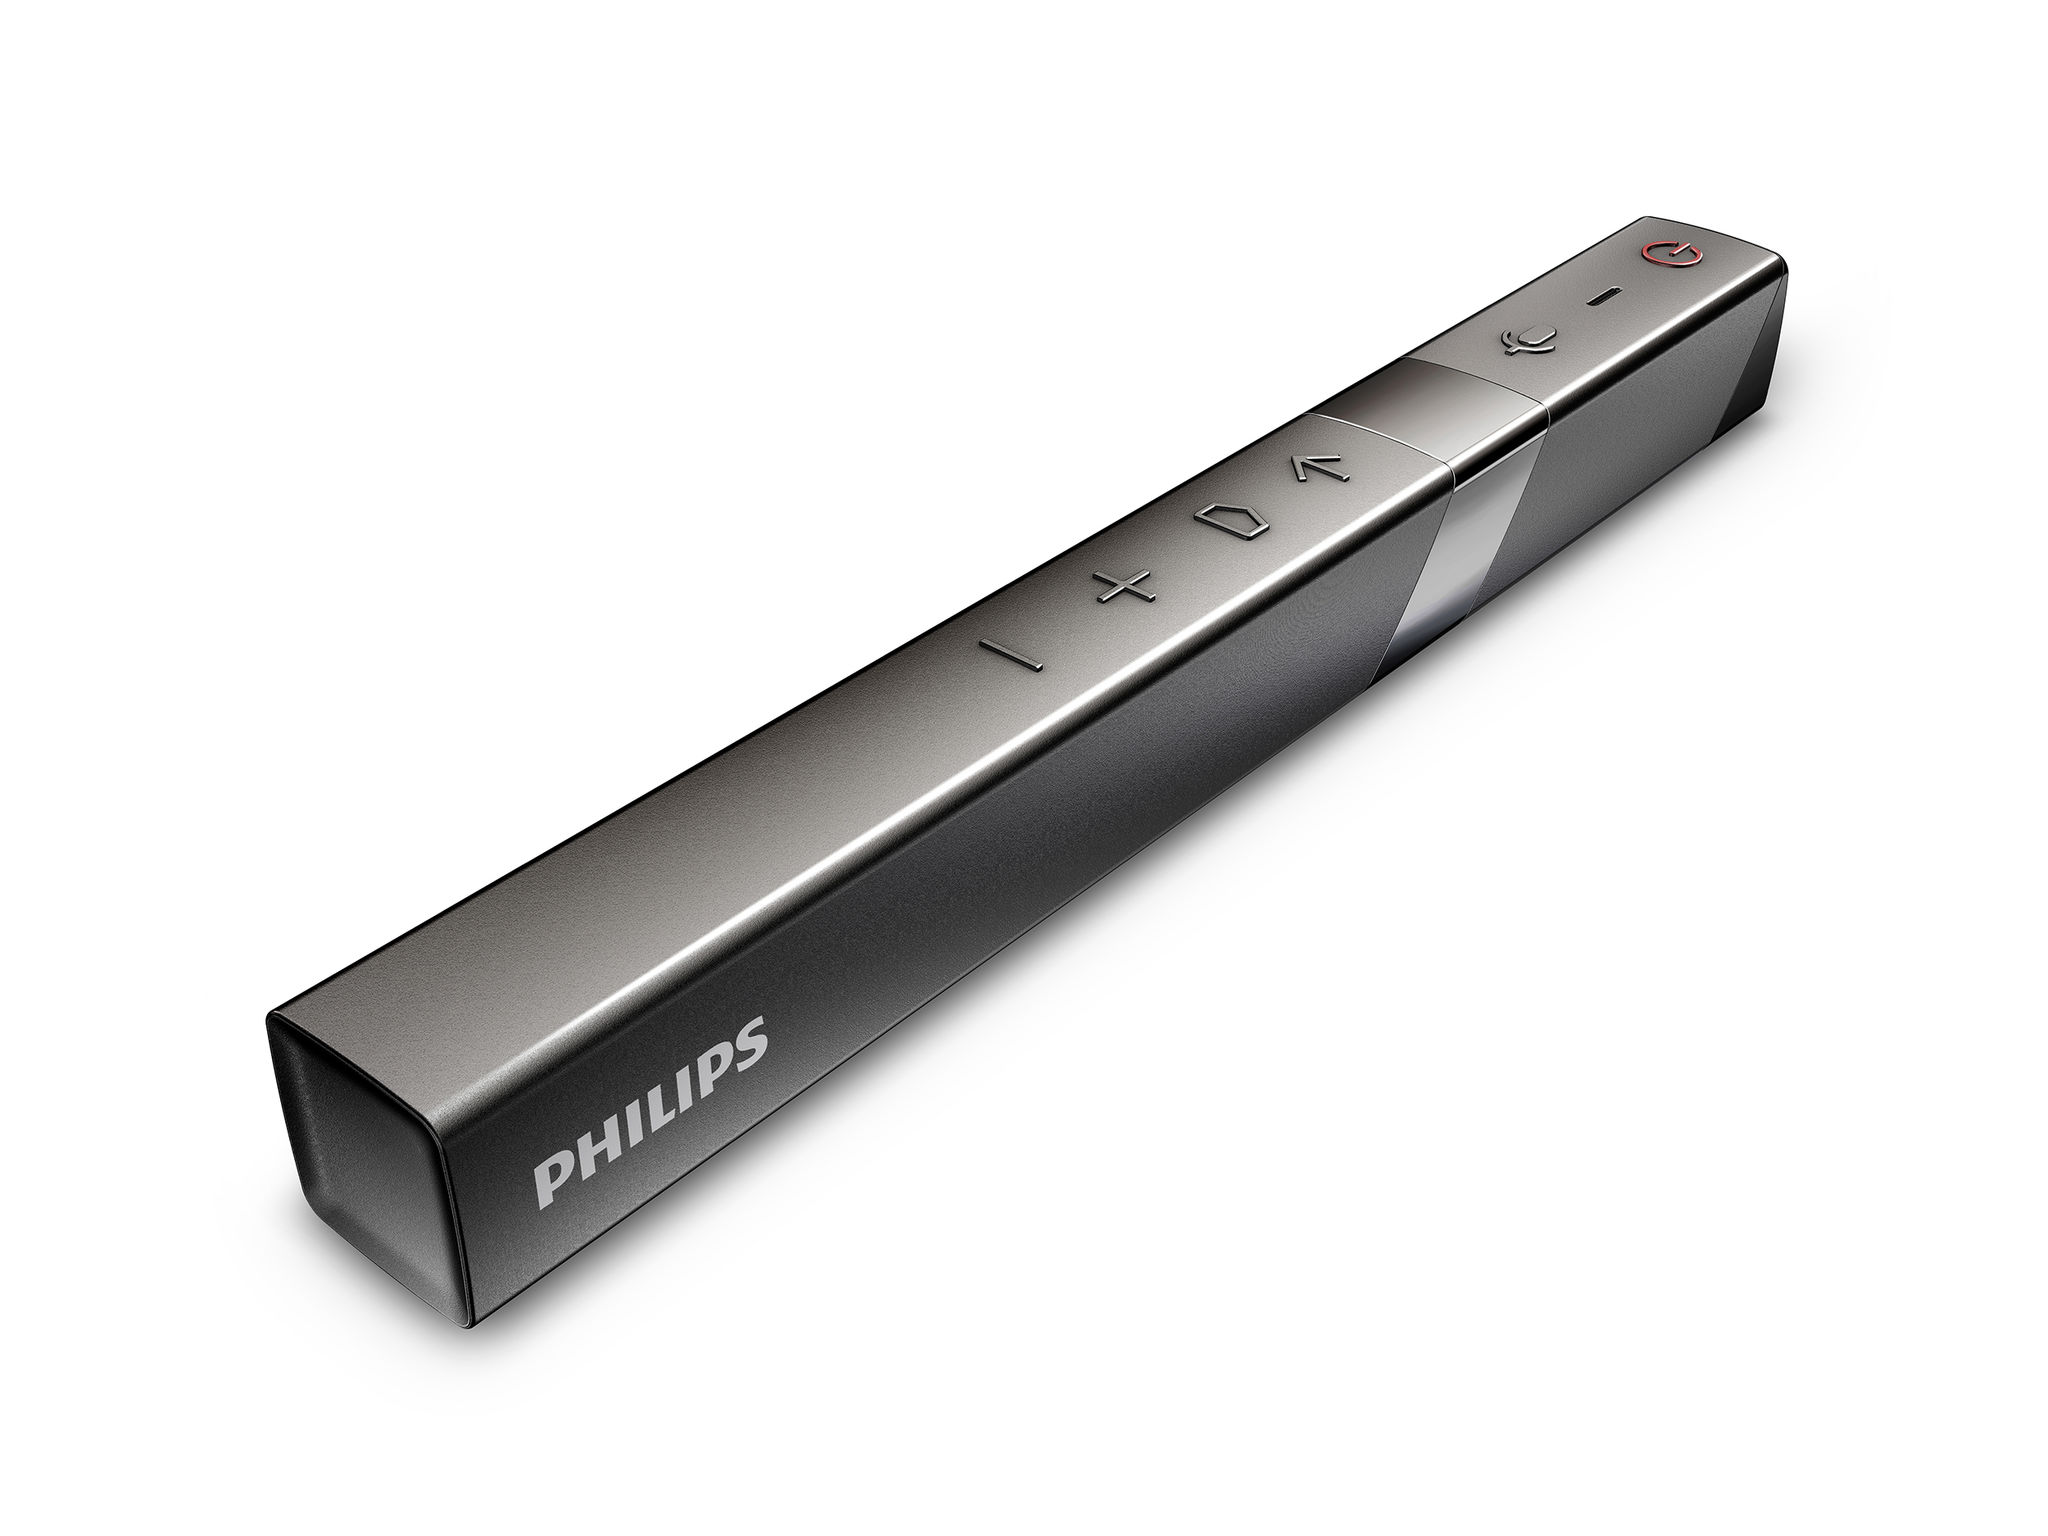 Philips 903 OLED TV